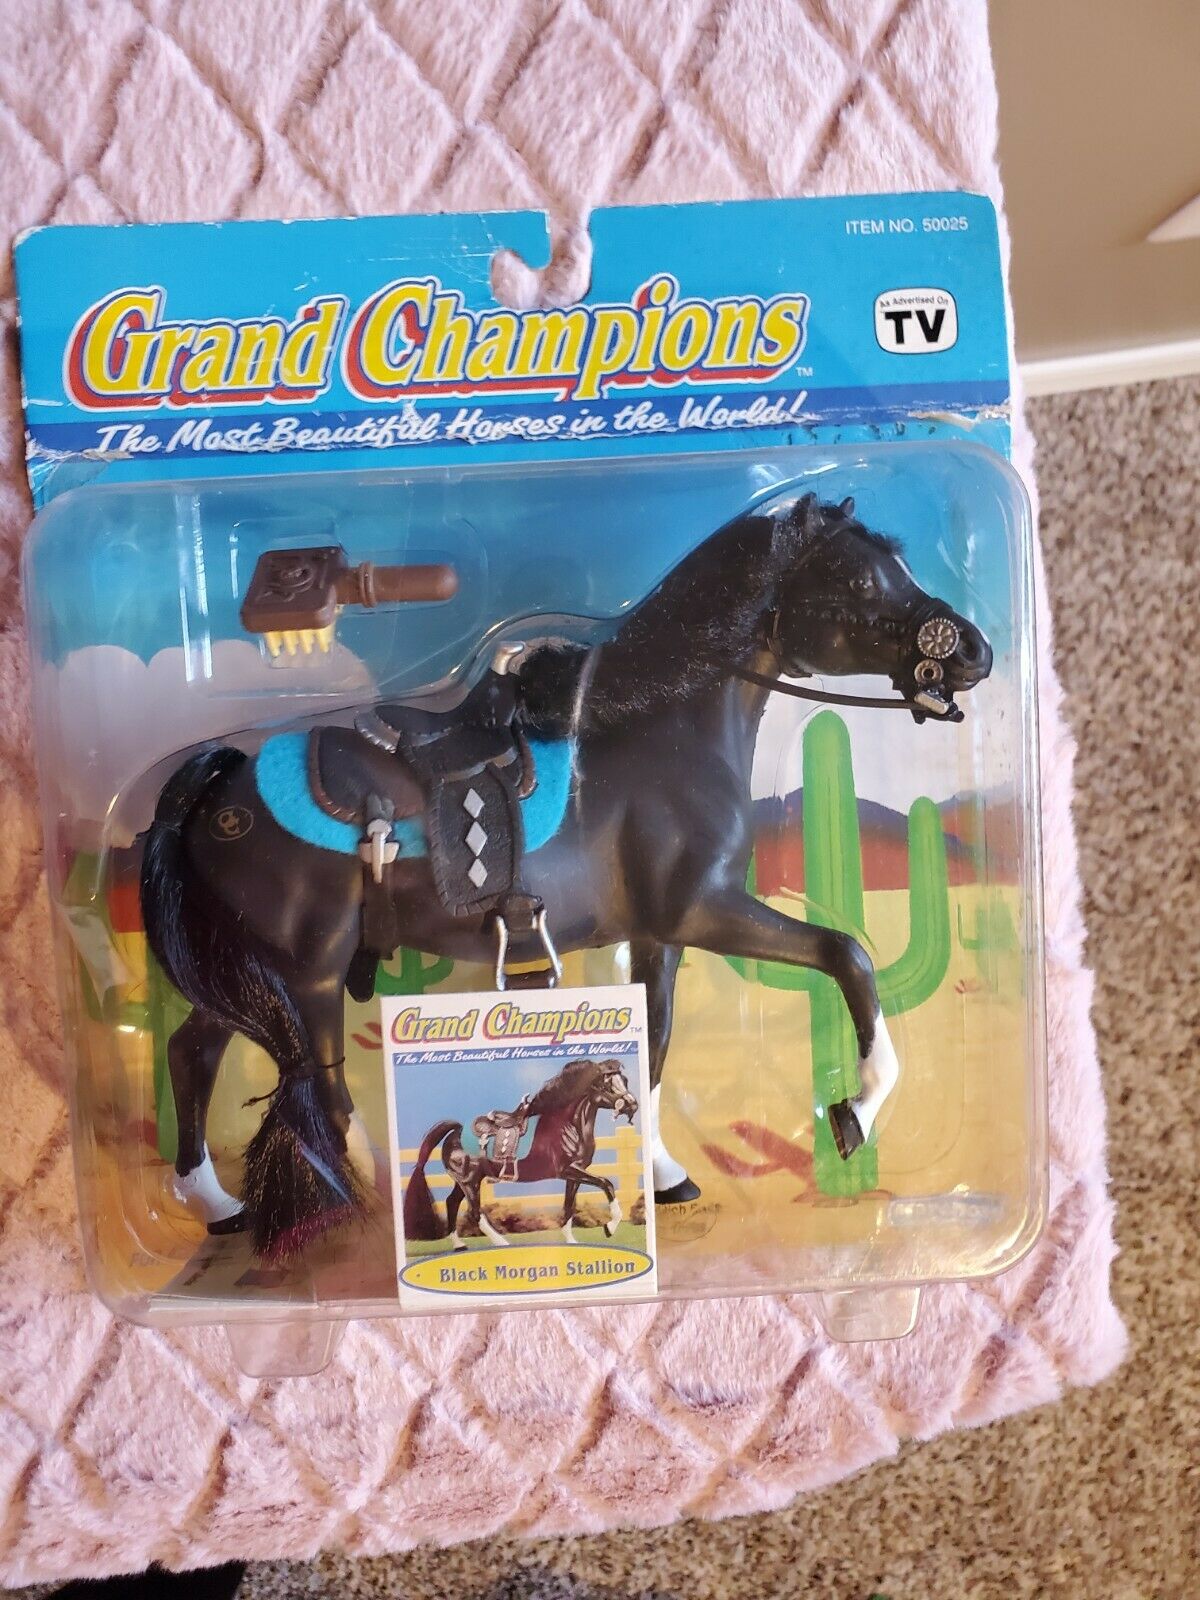 Grand Champions Black Morgan Stallion, in oringinal packaging